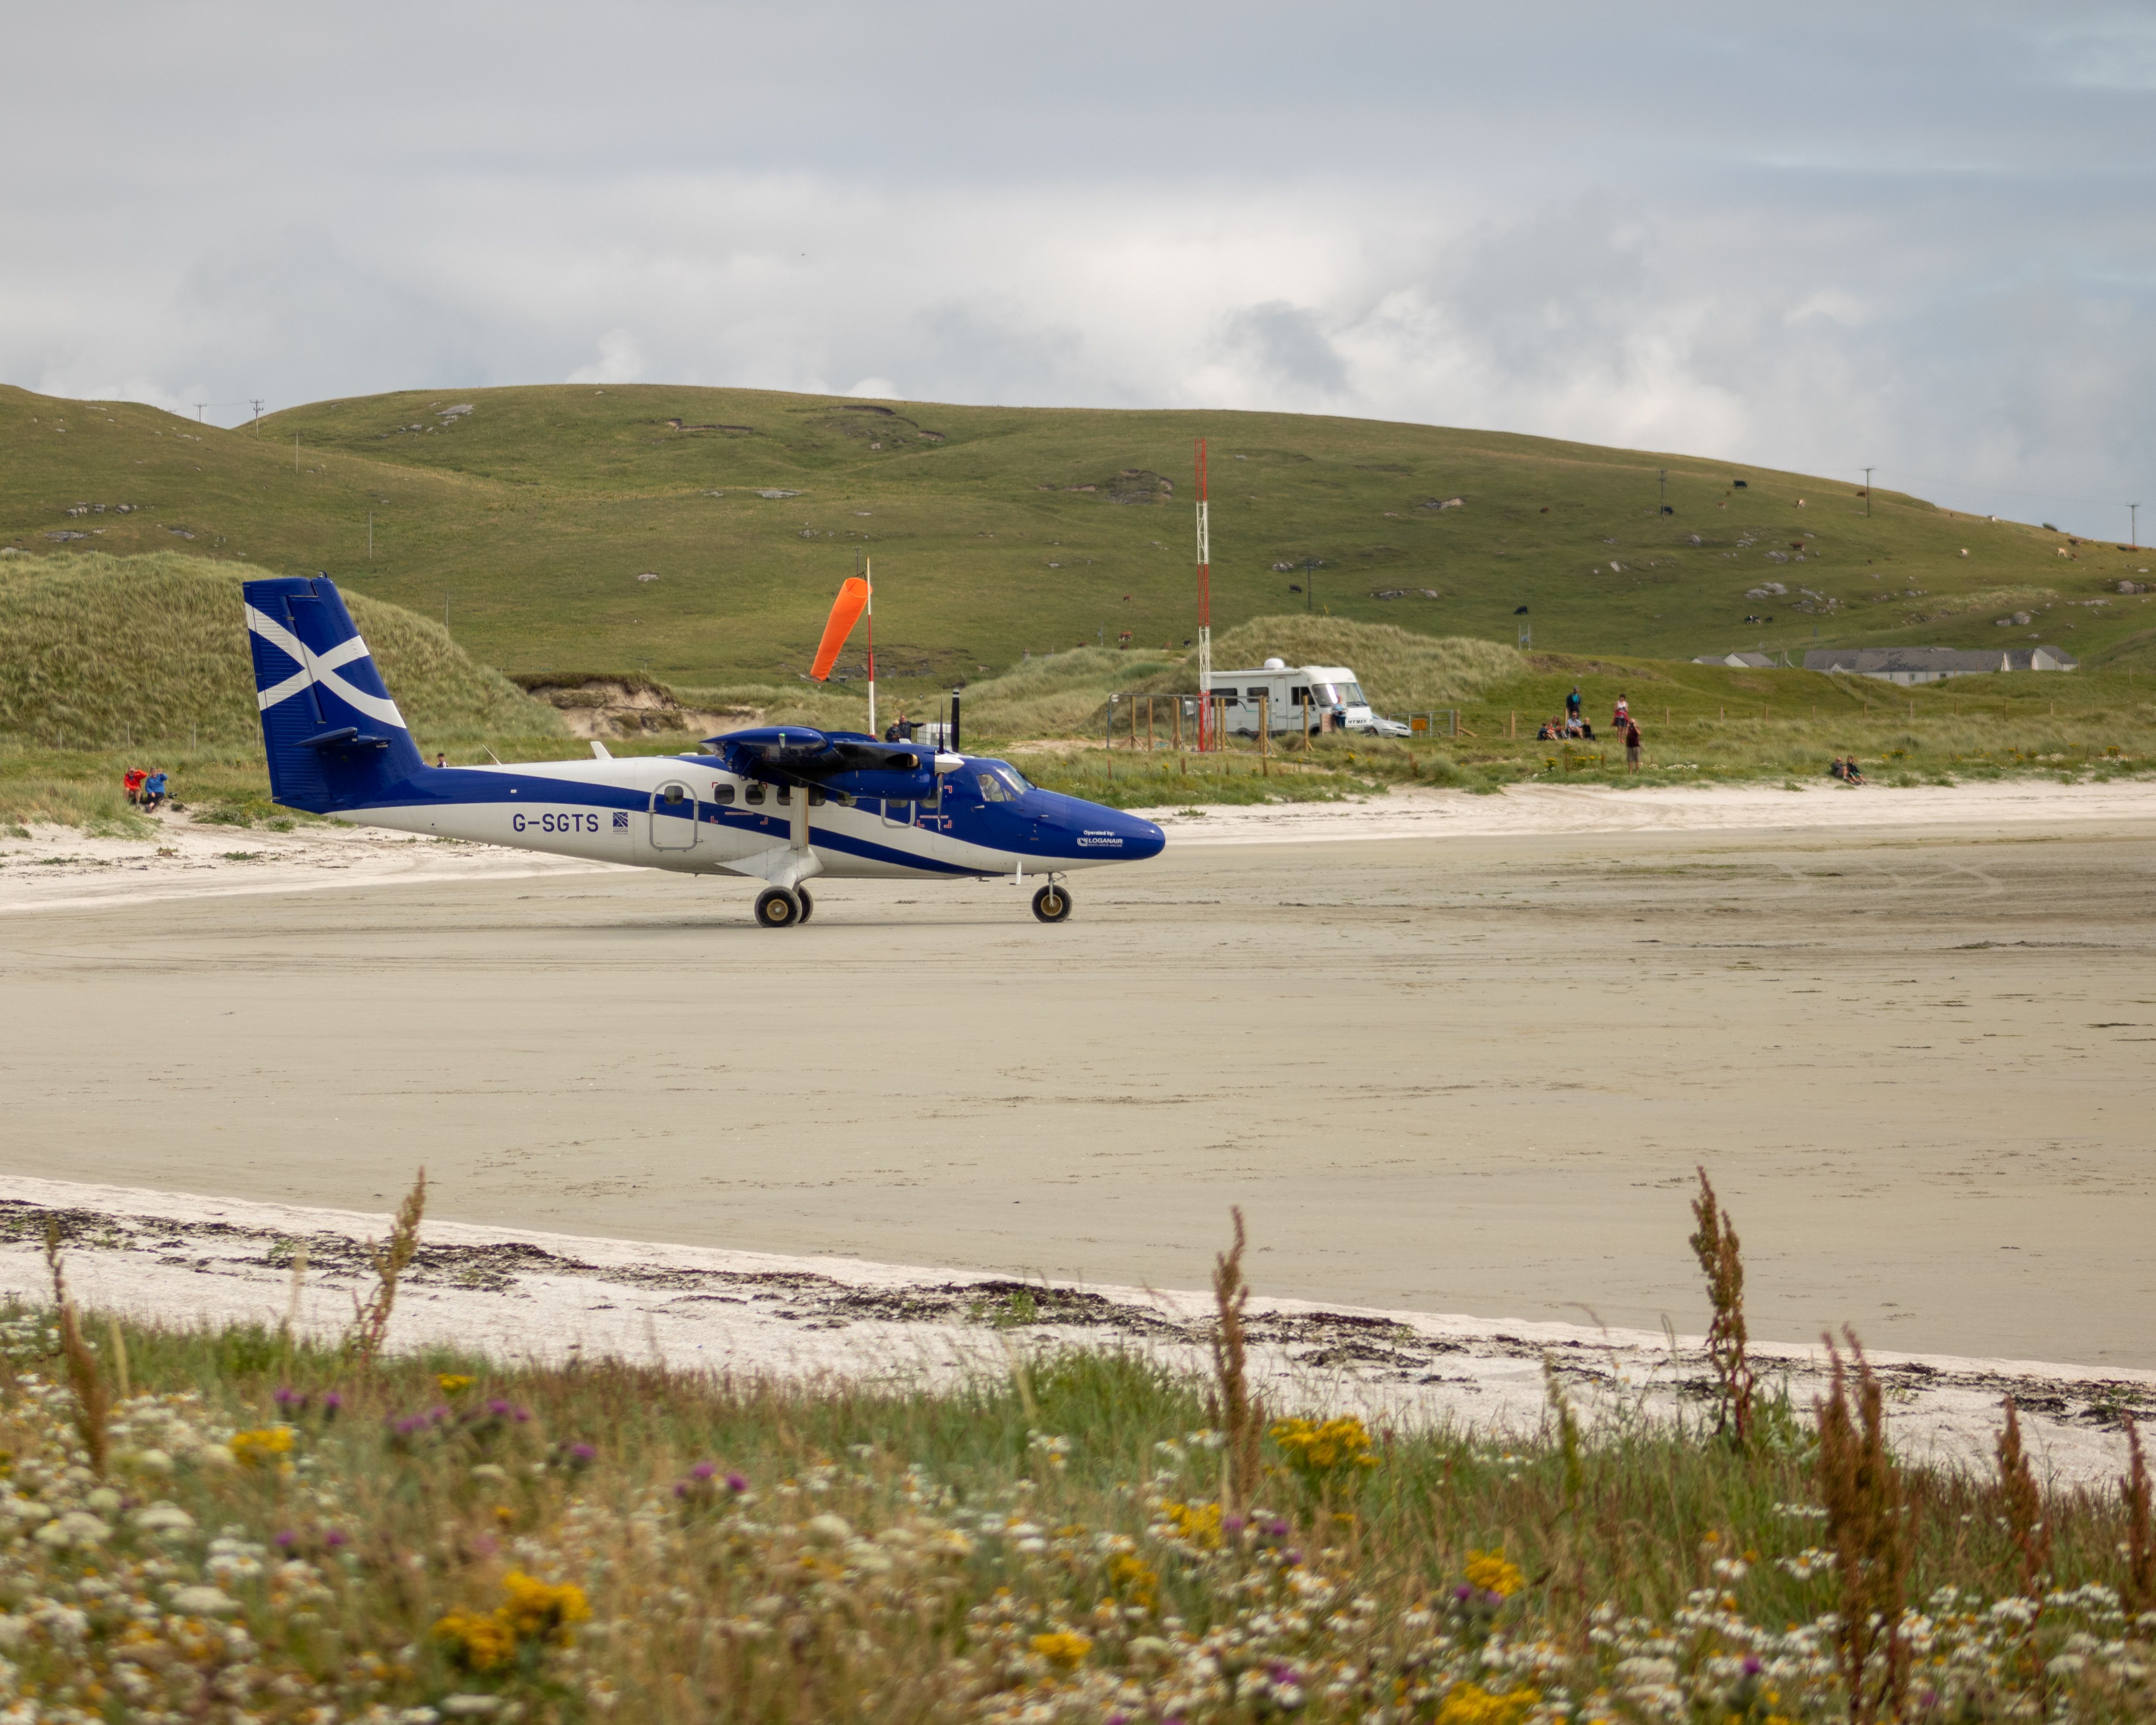 Barra Airport, Outer Hebrides, Scotland - a Loganair Twin Otter lands